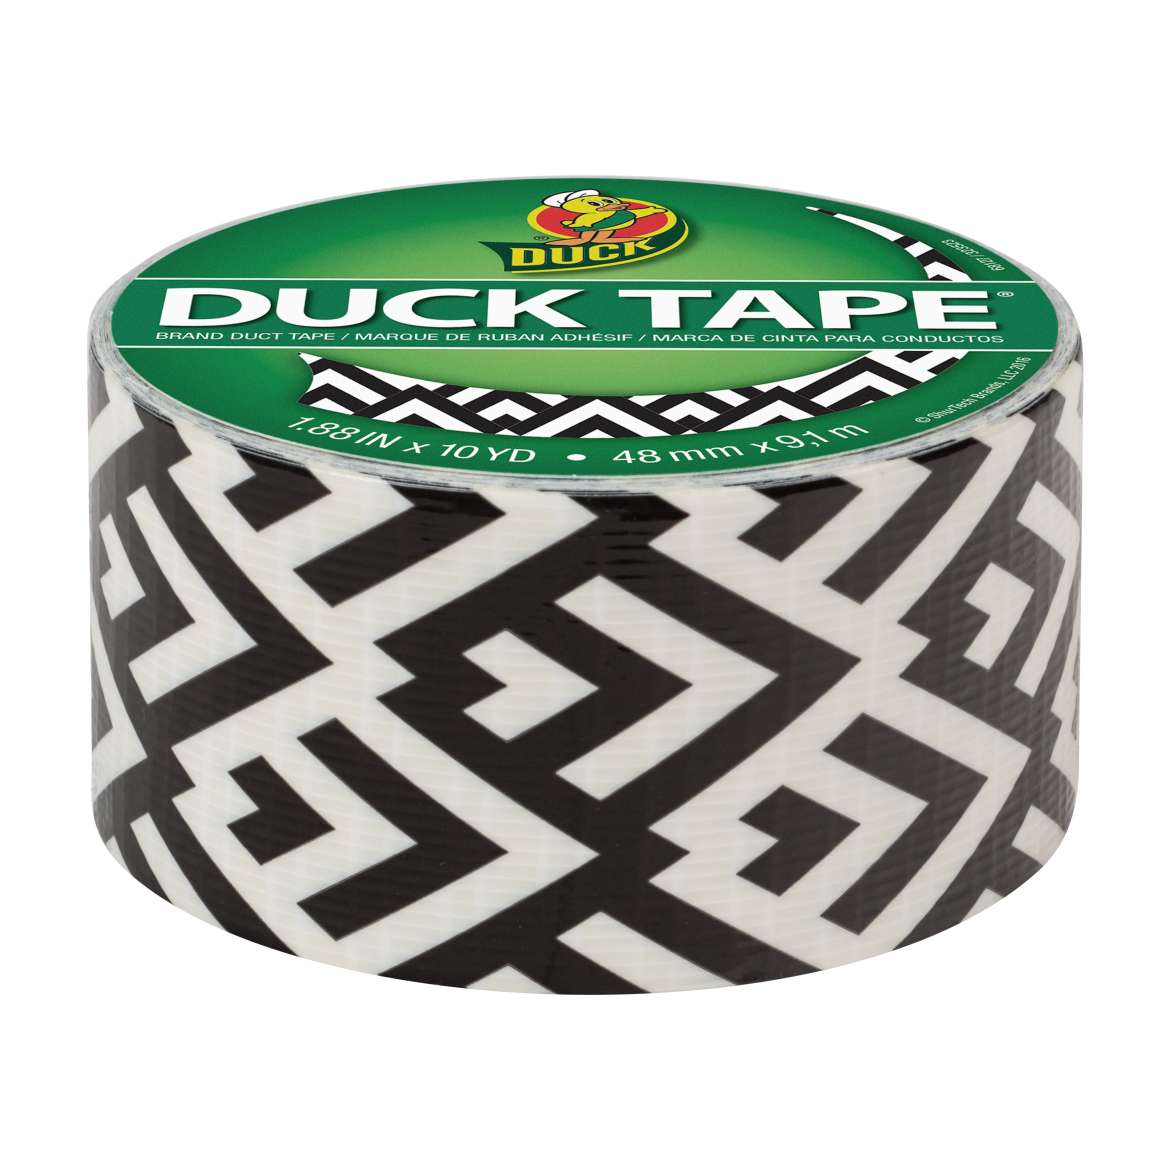 custom duck tape